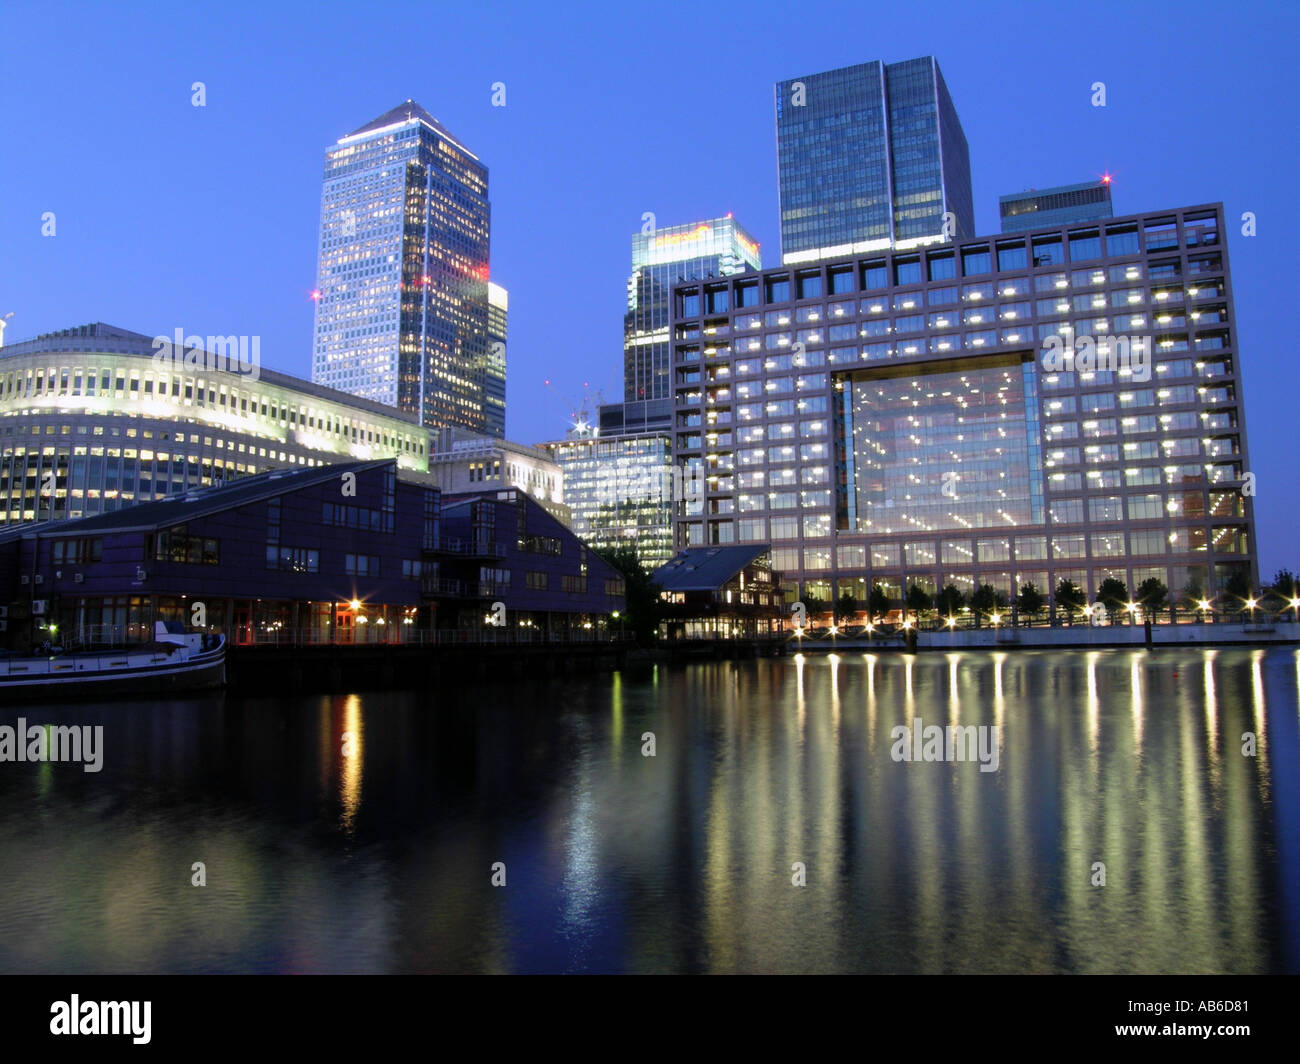 Canary Wharf Docklands Londra Inghilterra Regno Unito Regno Unito Regno Unito al tramonto Foto Stock